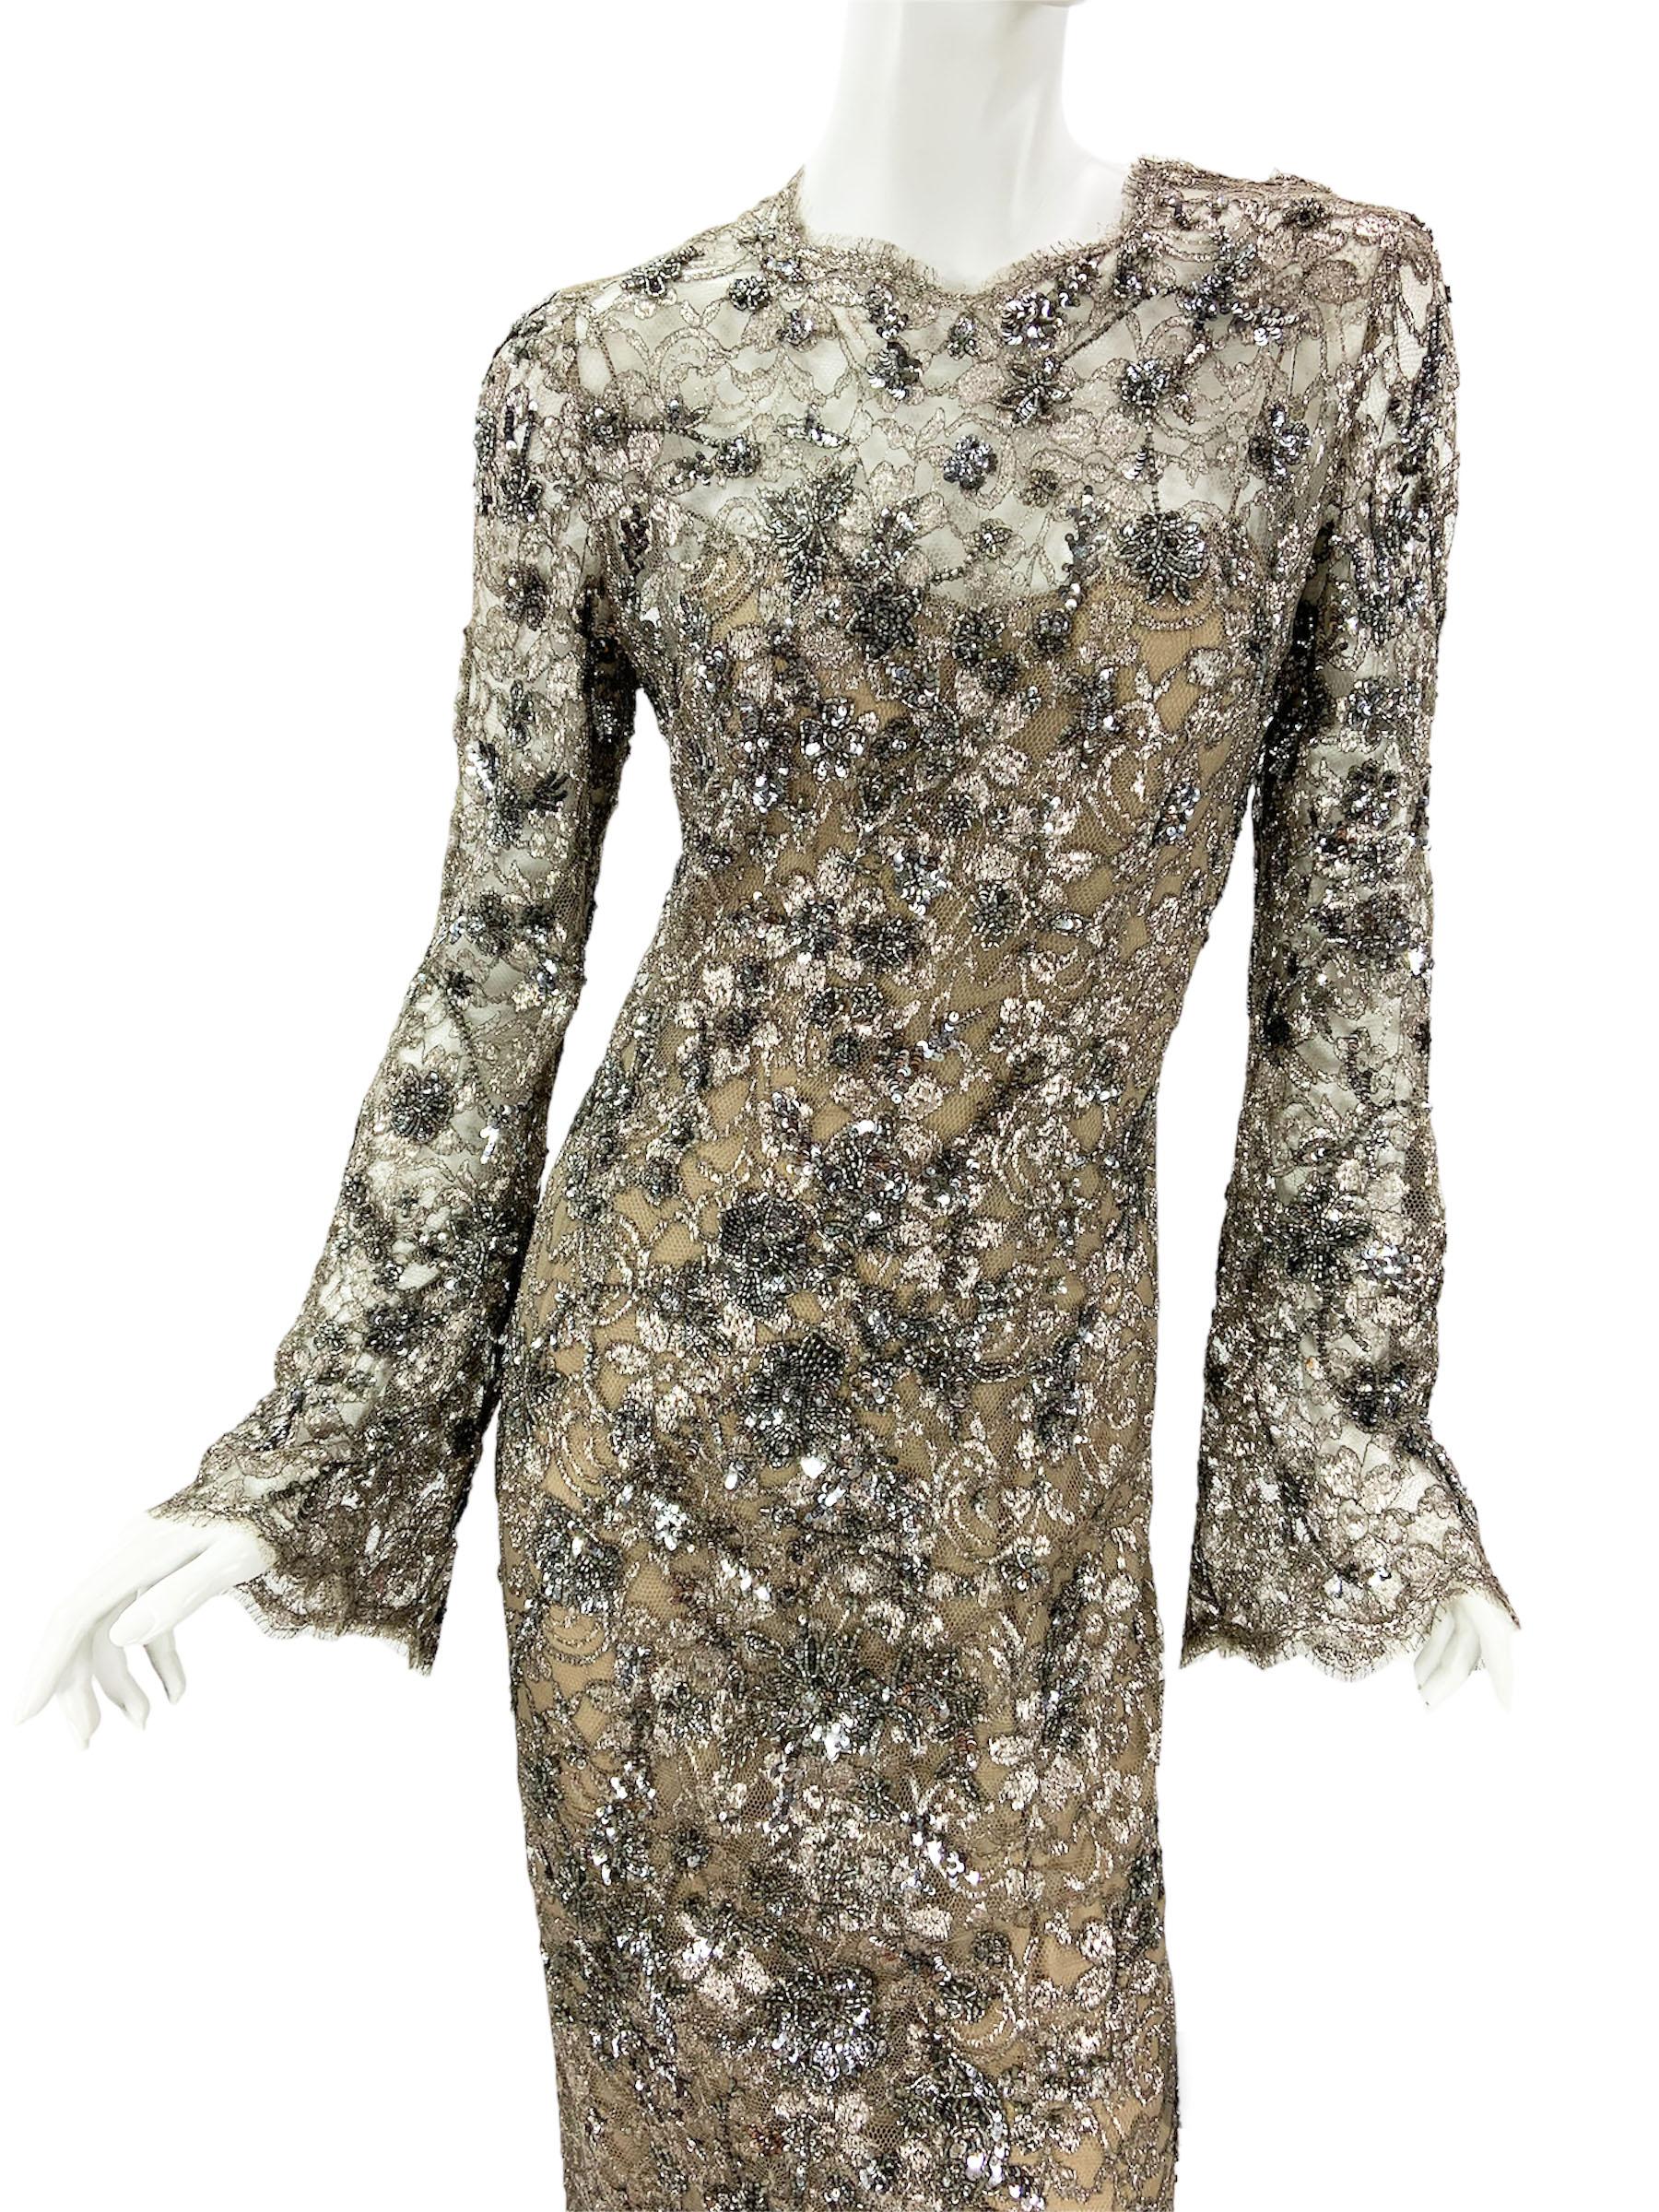 Vintage Oscar de la Renta Fully Embellished Smoky Gray Lace Dress Gown  3